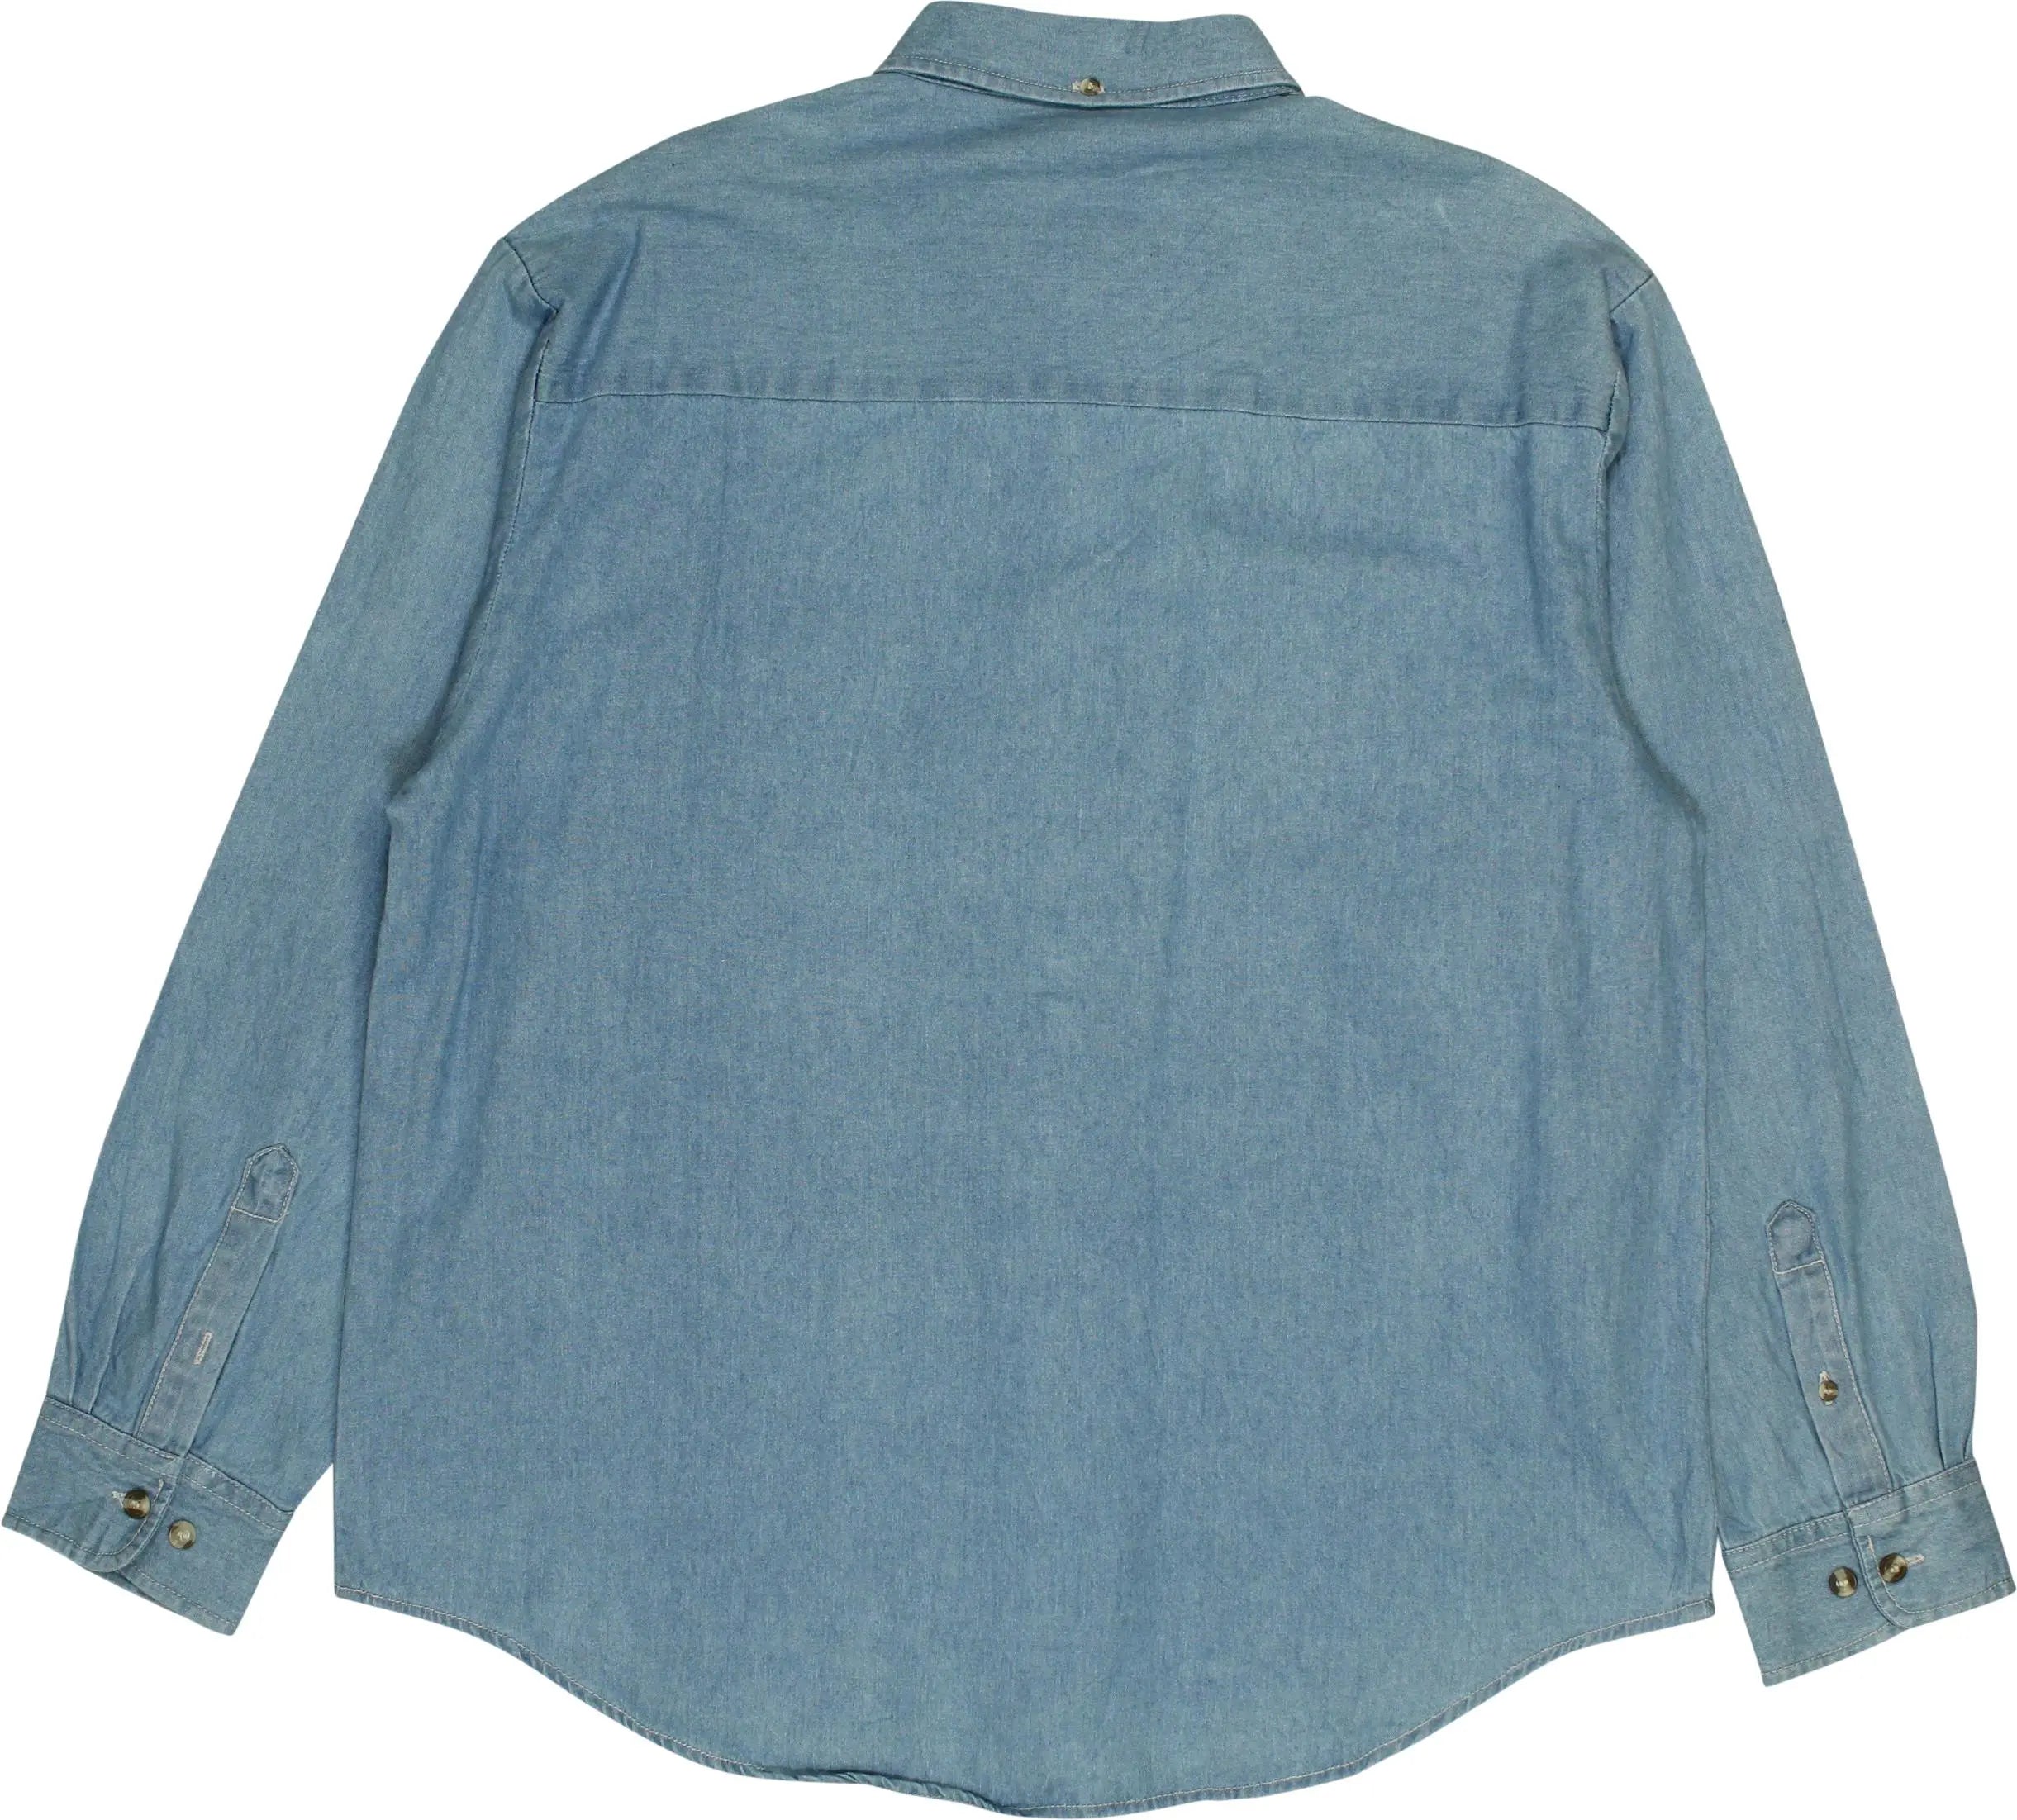 Global - Denim Shirt- ThriftTale.com - Vintage and second handclothing